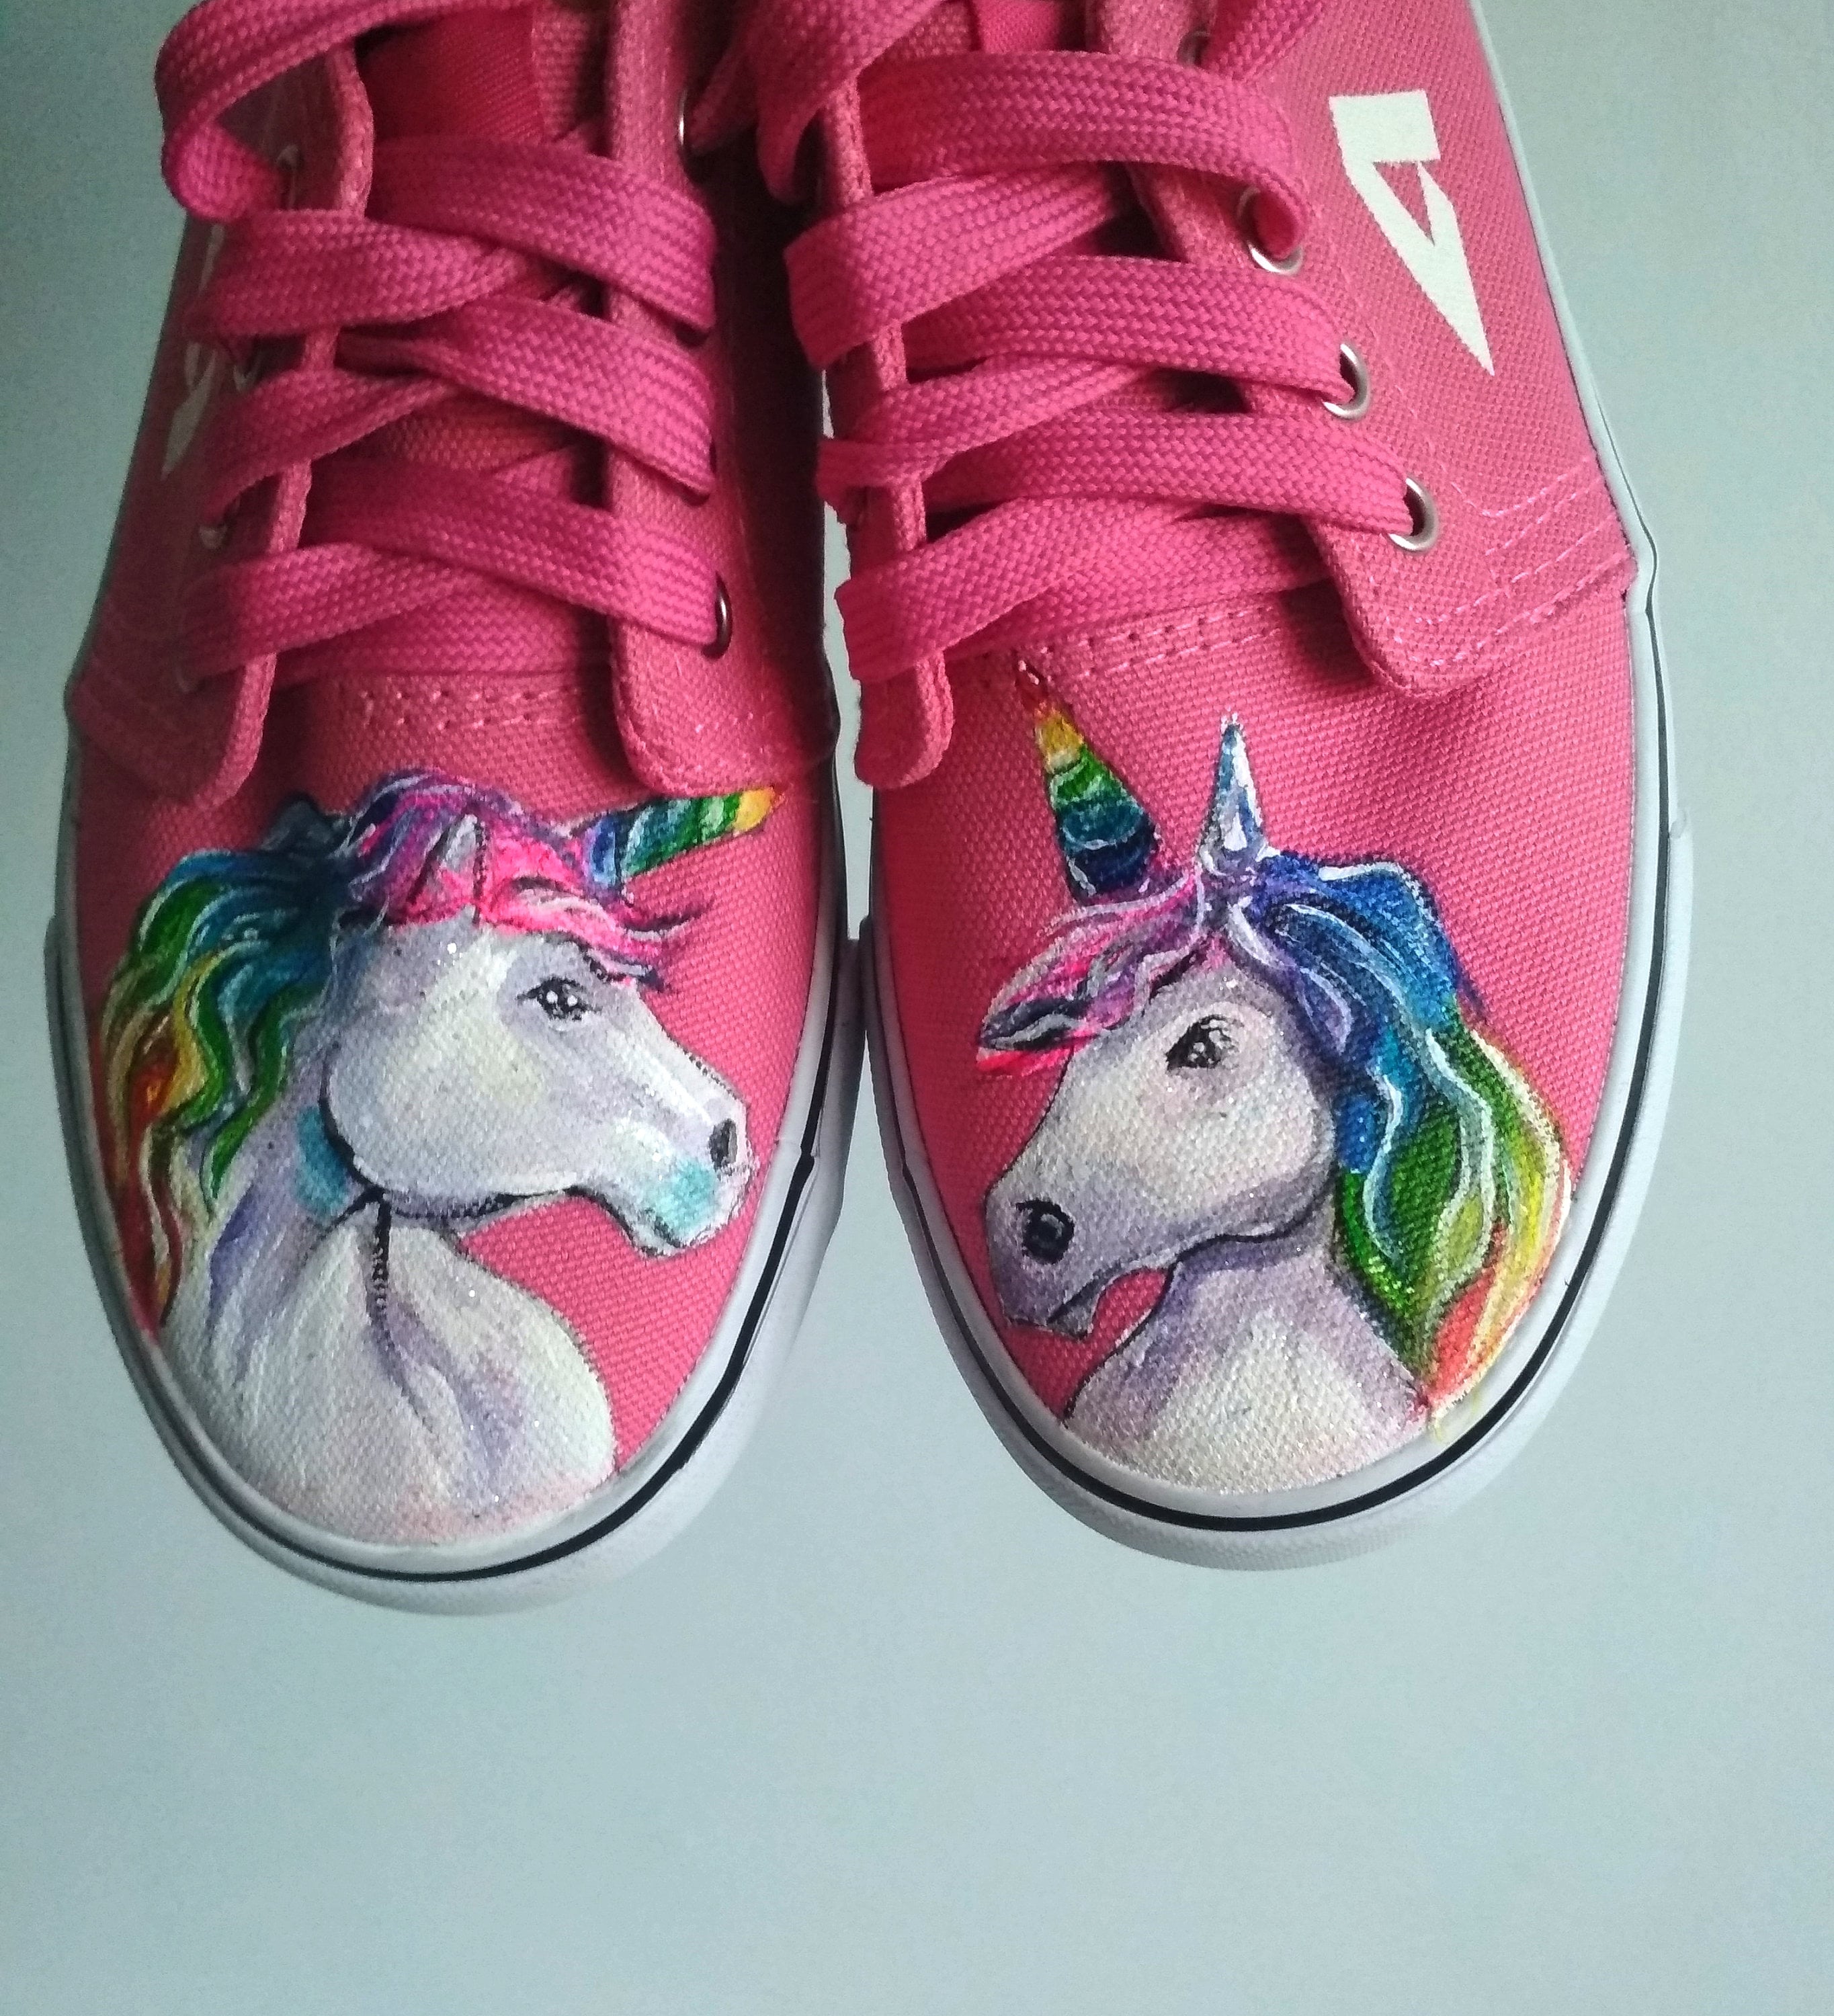 Unicorn кроссовки. Туфли Единорог. Покажи ботинки с единорогами. Balmain Blue & Pink Unicorn Sneakers.